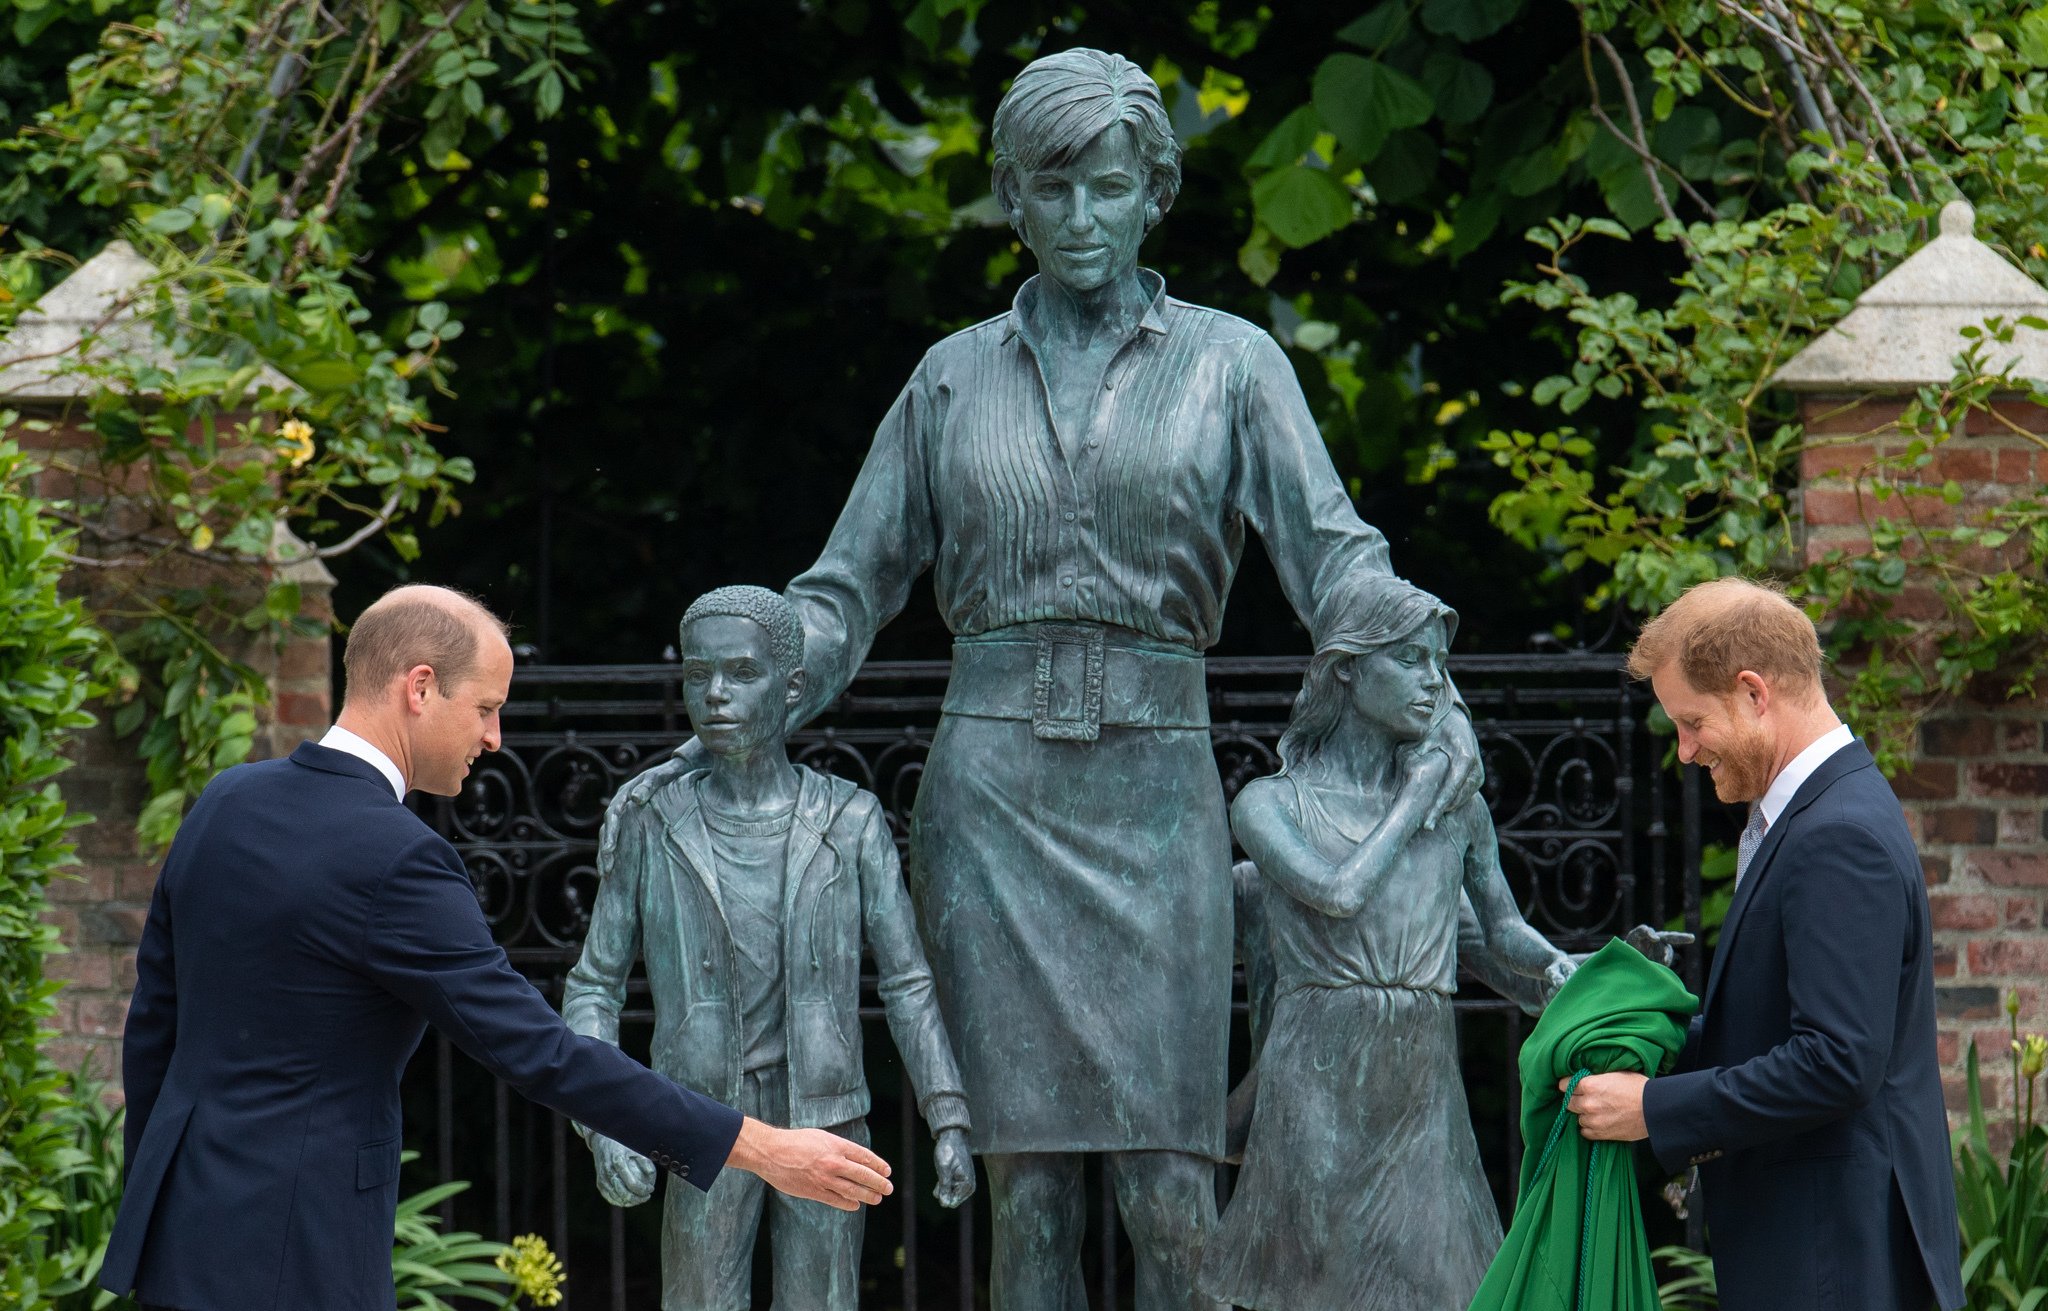 William y Charles inauguran una estatua homenaje a Diana, julio de 2021. | Foto: Getty Images